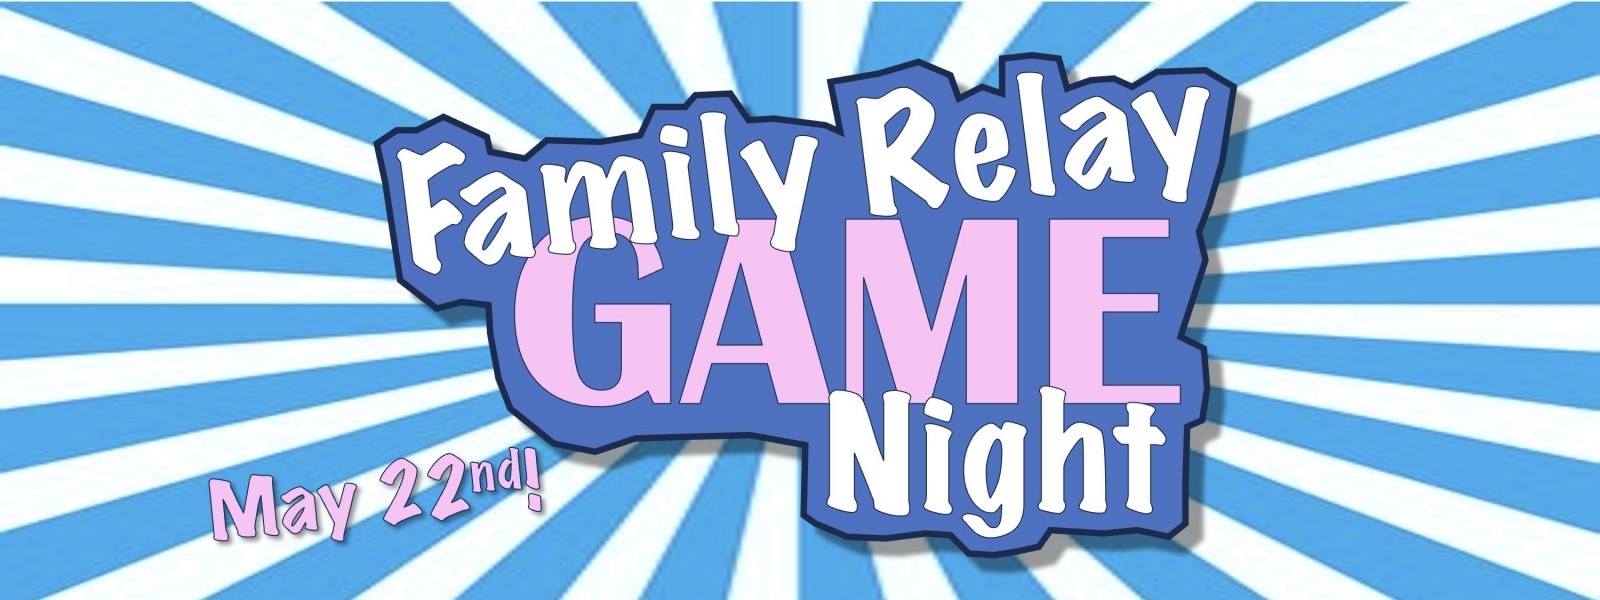 Family Relay Game Night! Wednesday, May 22nd at 6:30 at Calvary Chapel Naples.